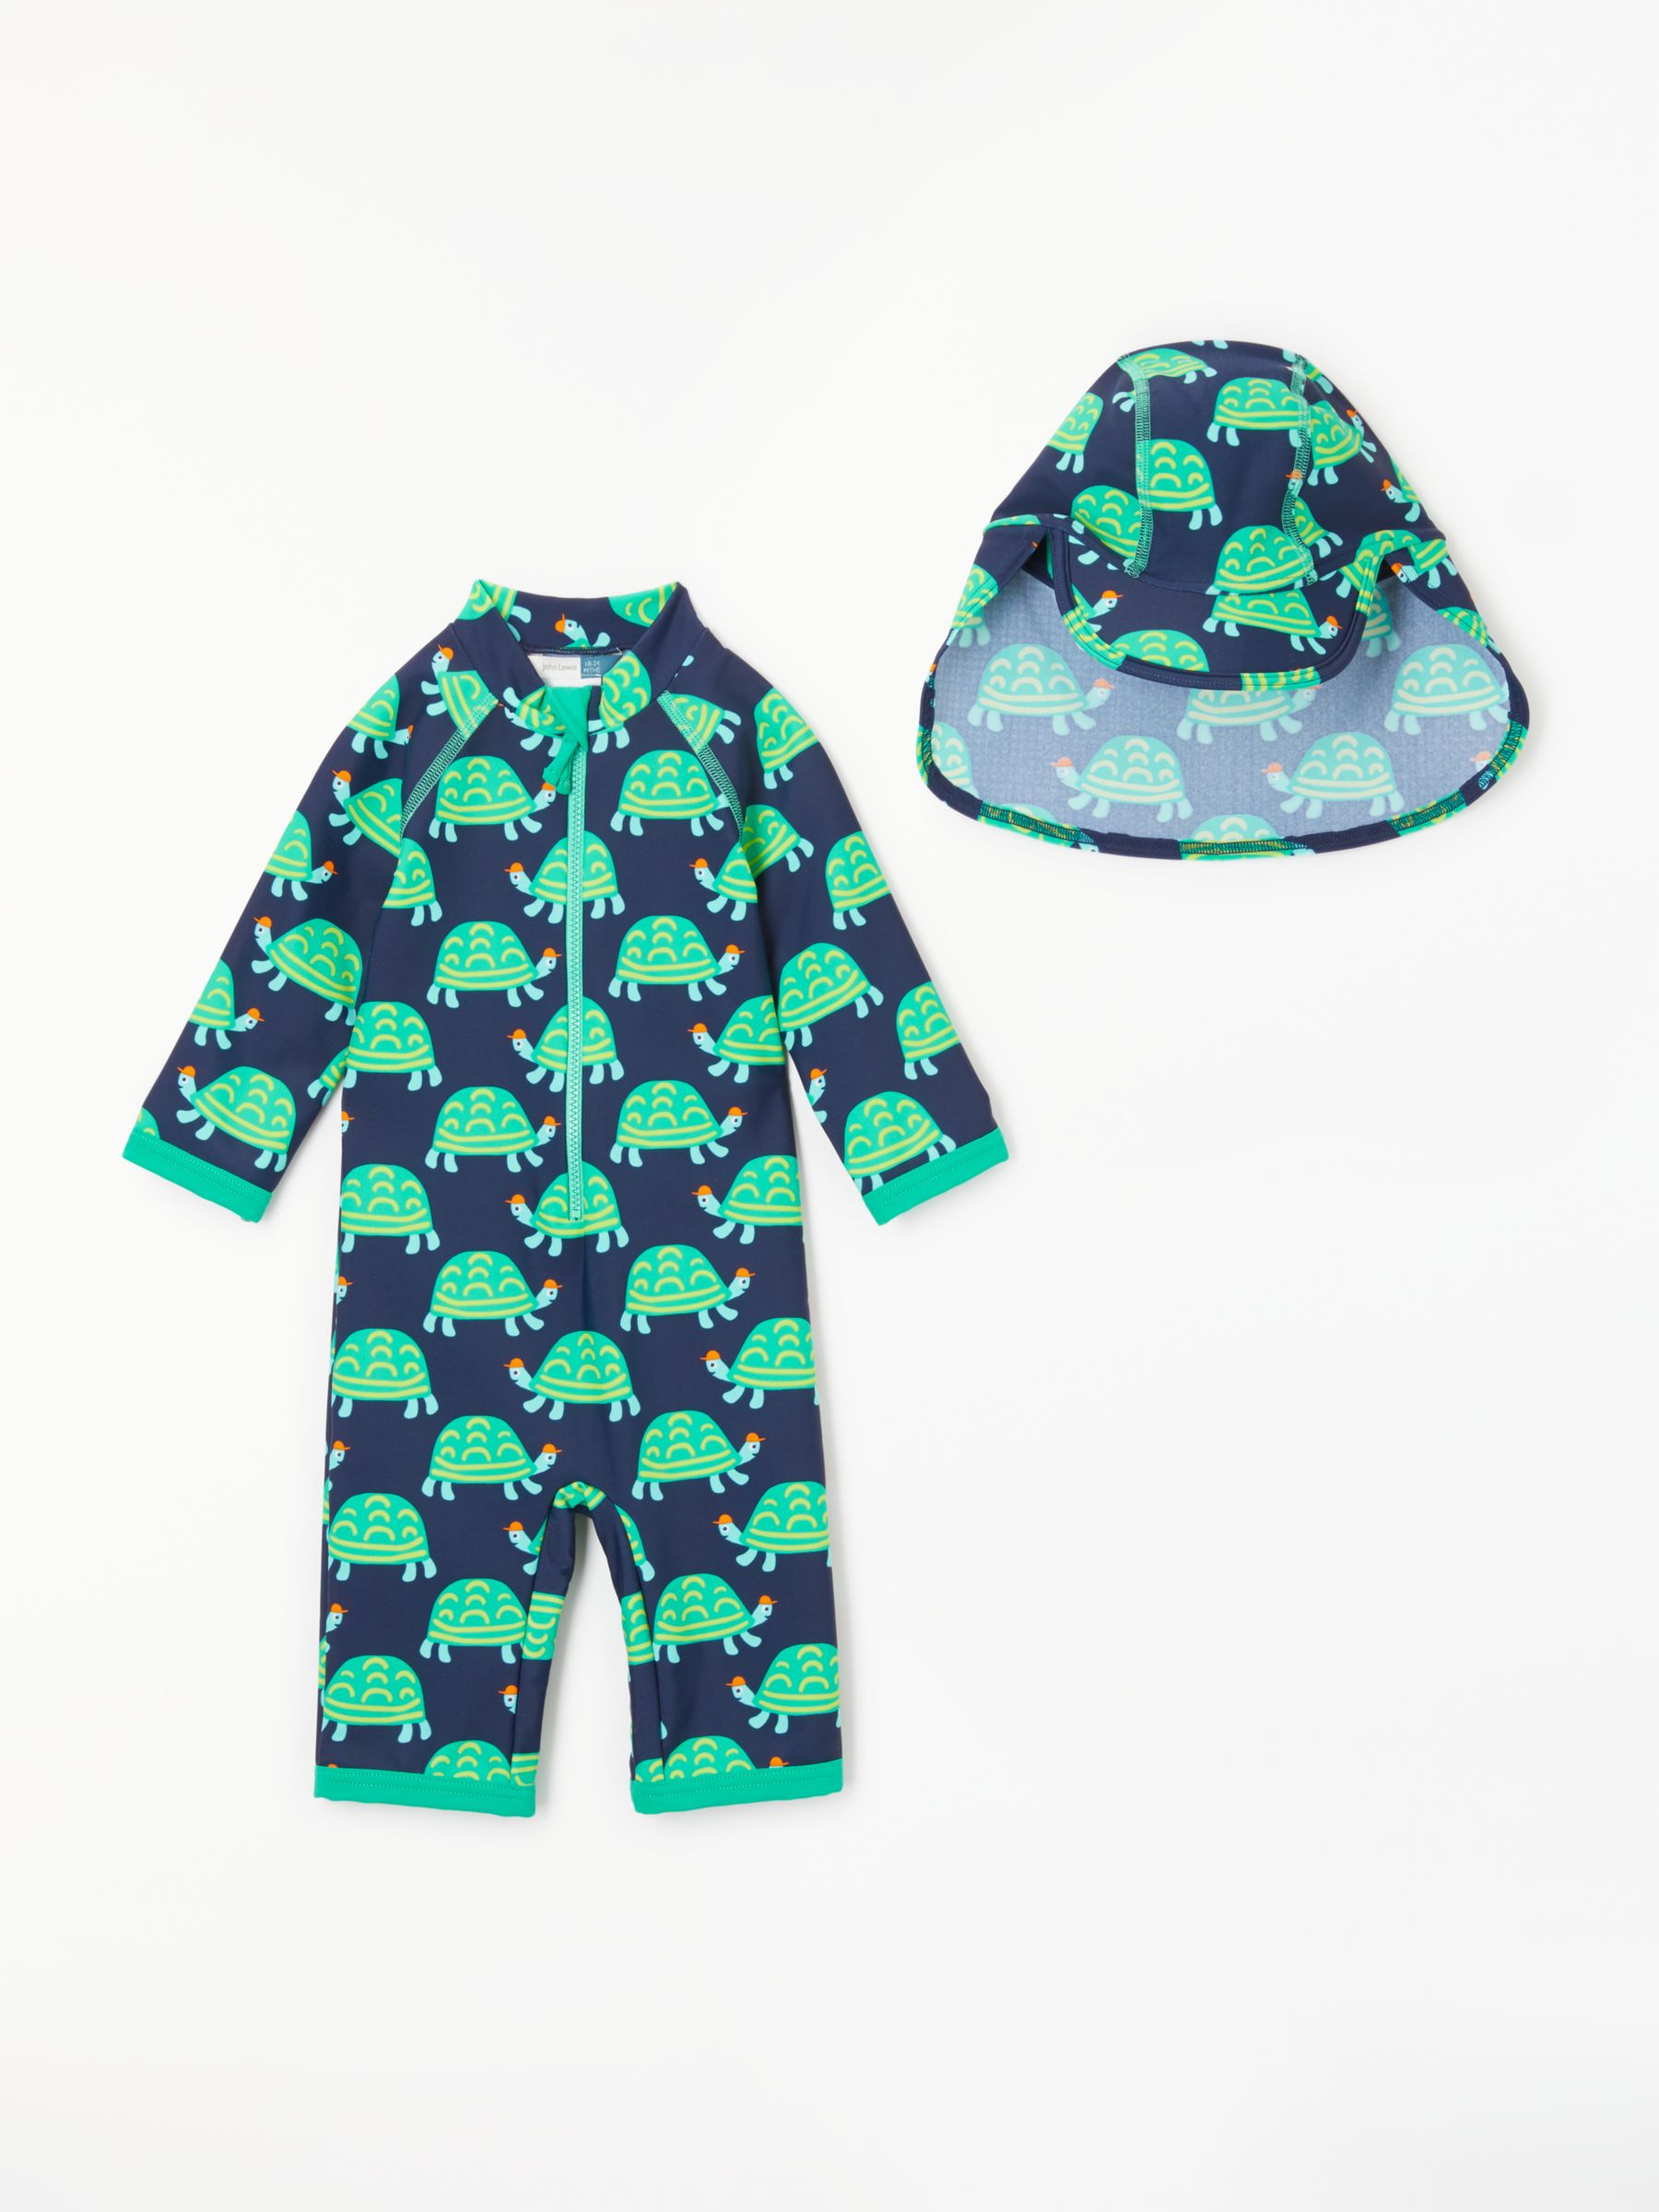 John Lewis & Partners Baby Tortoise UV SunPro Swimsuit and Hat, Navy/Green, 2-3 years